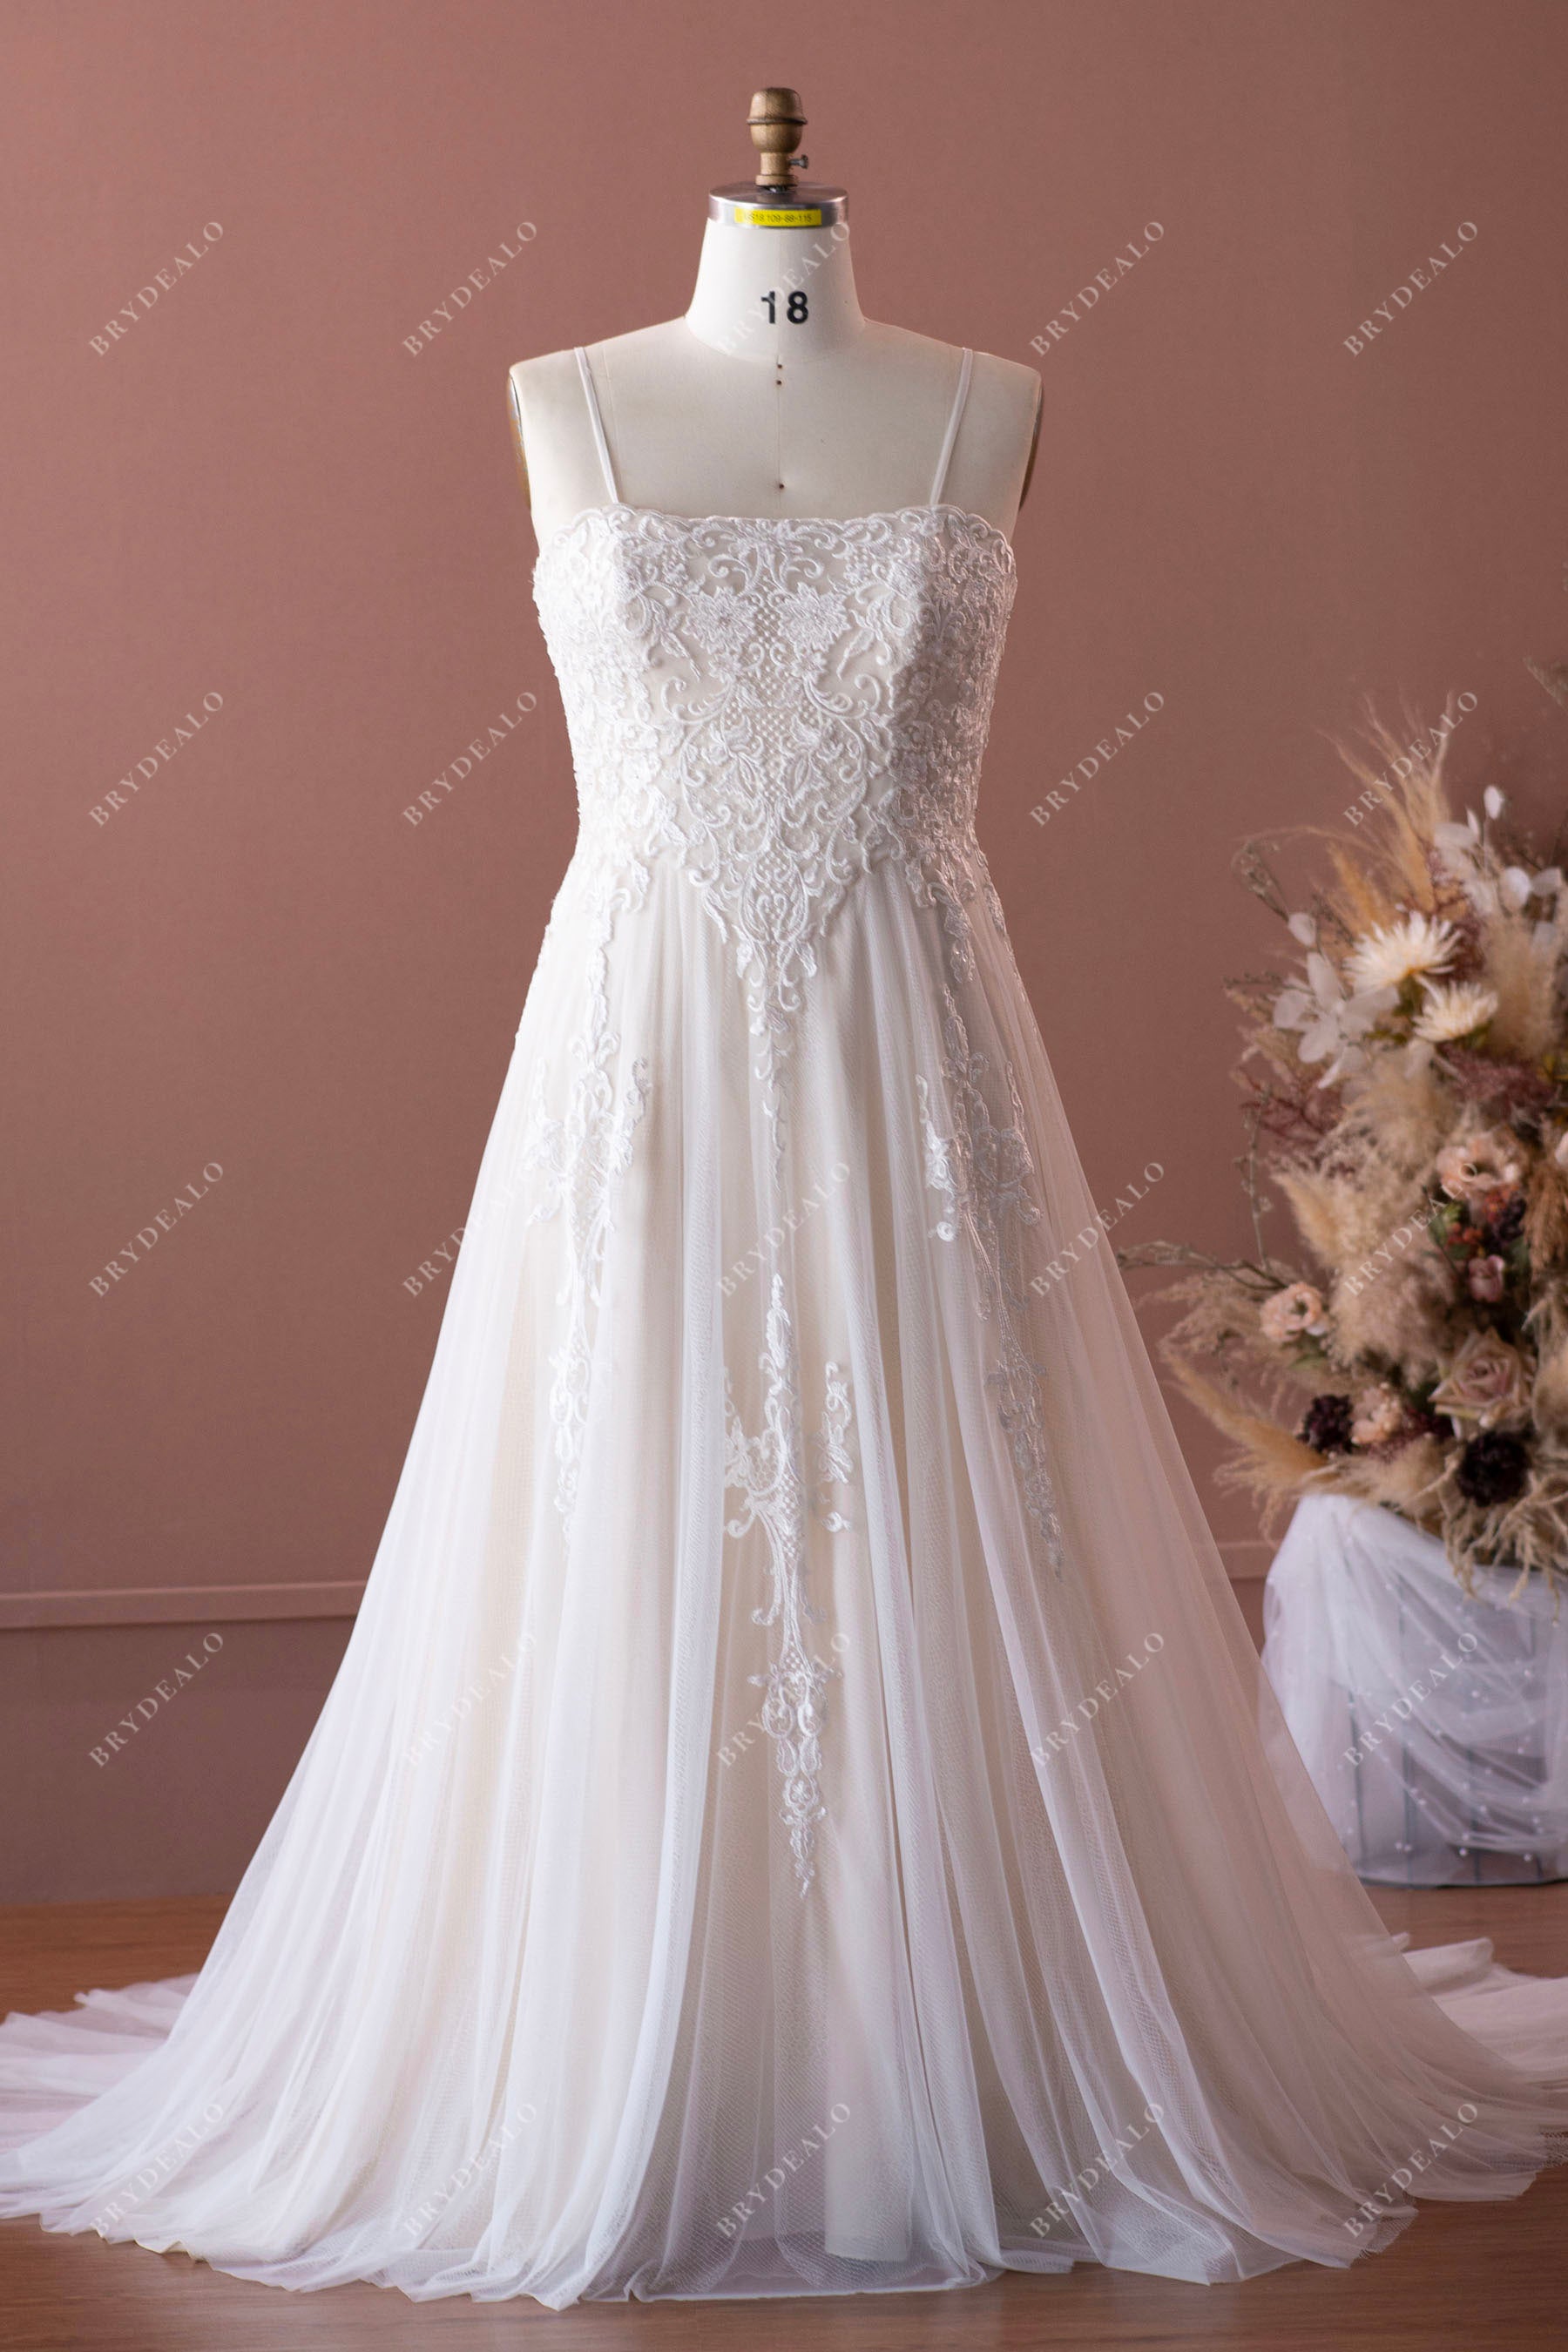 Spaghetti Strap Floor-length A-line Wedding Dress